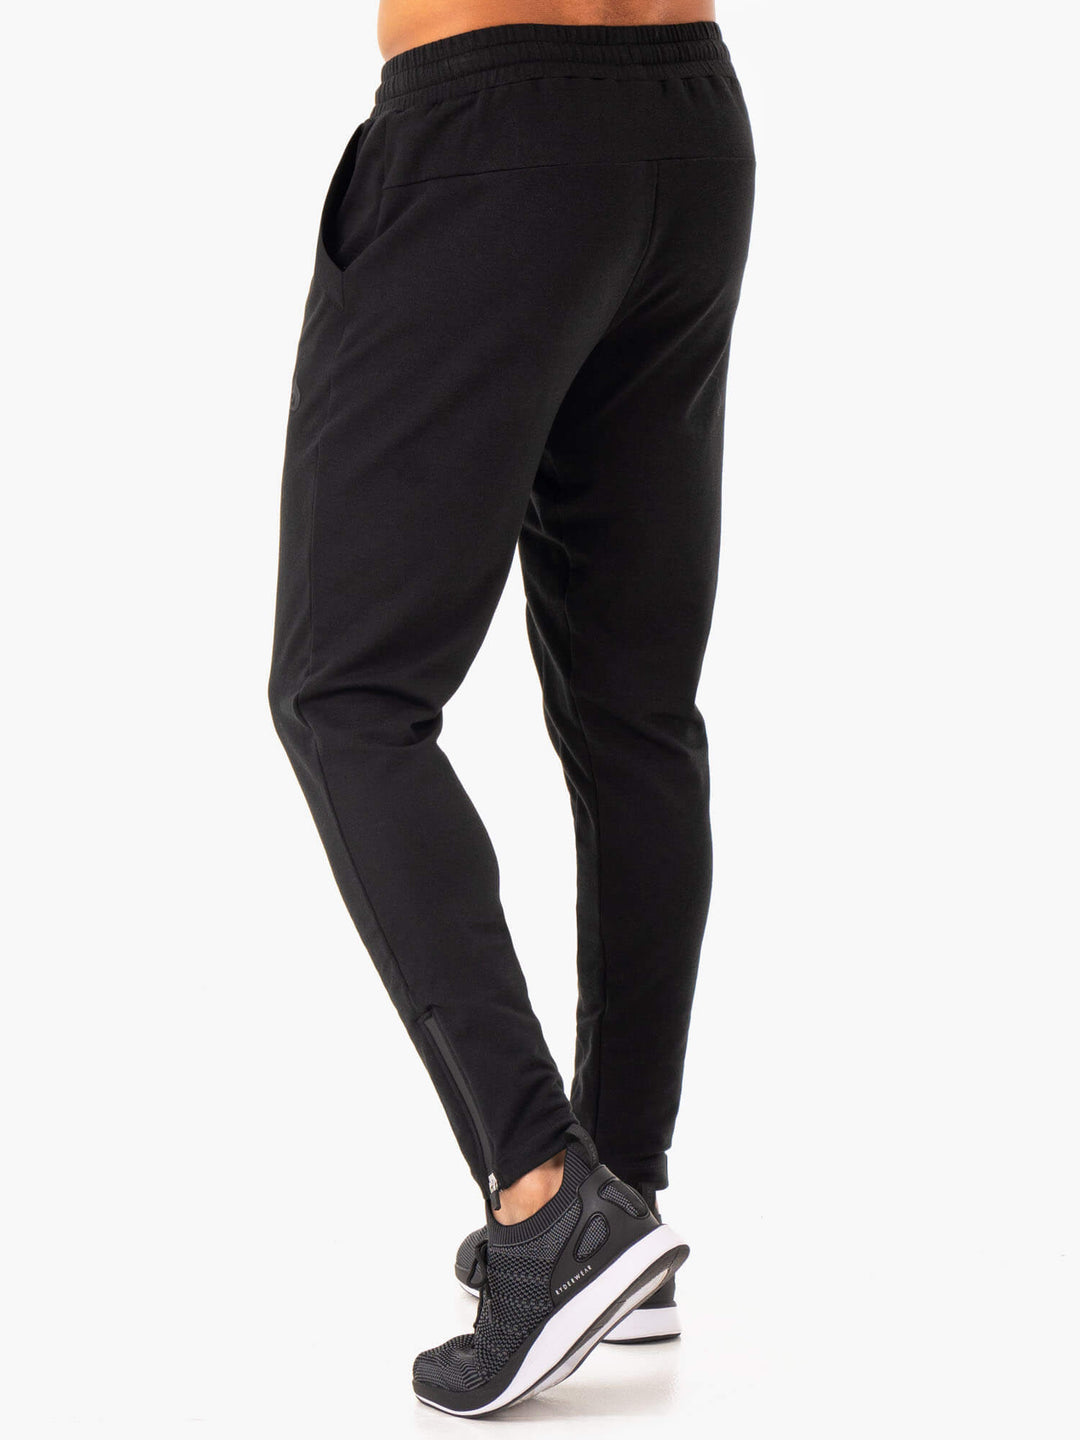 Optimal Gym Track Pant - Black - Ryderwear